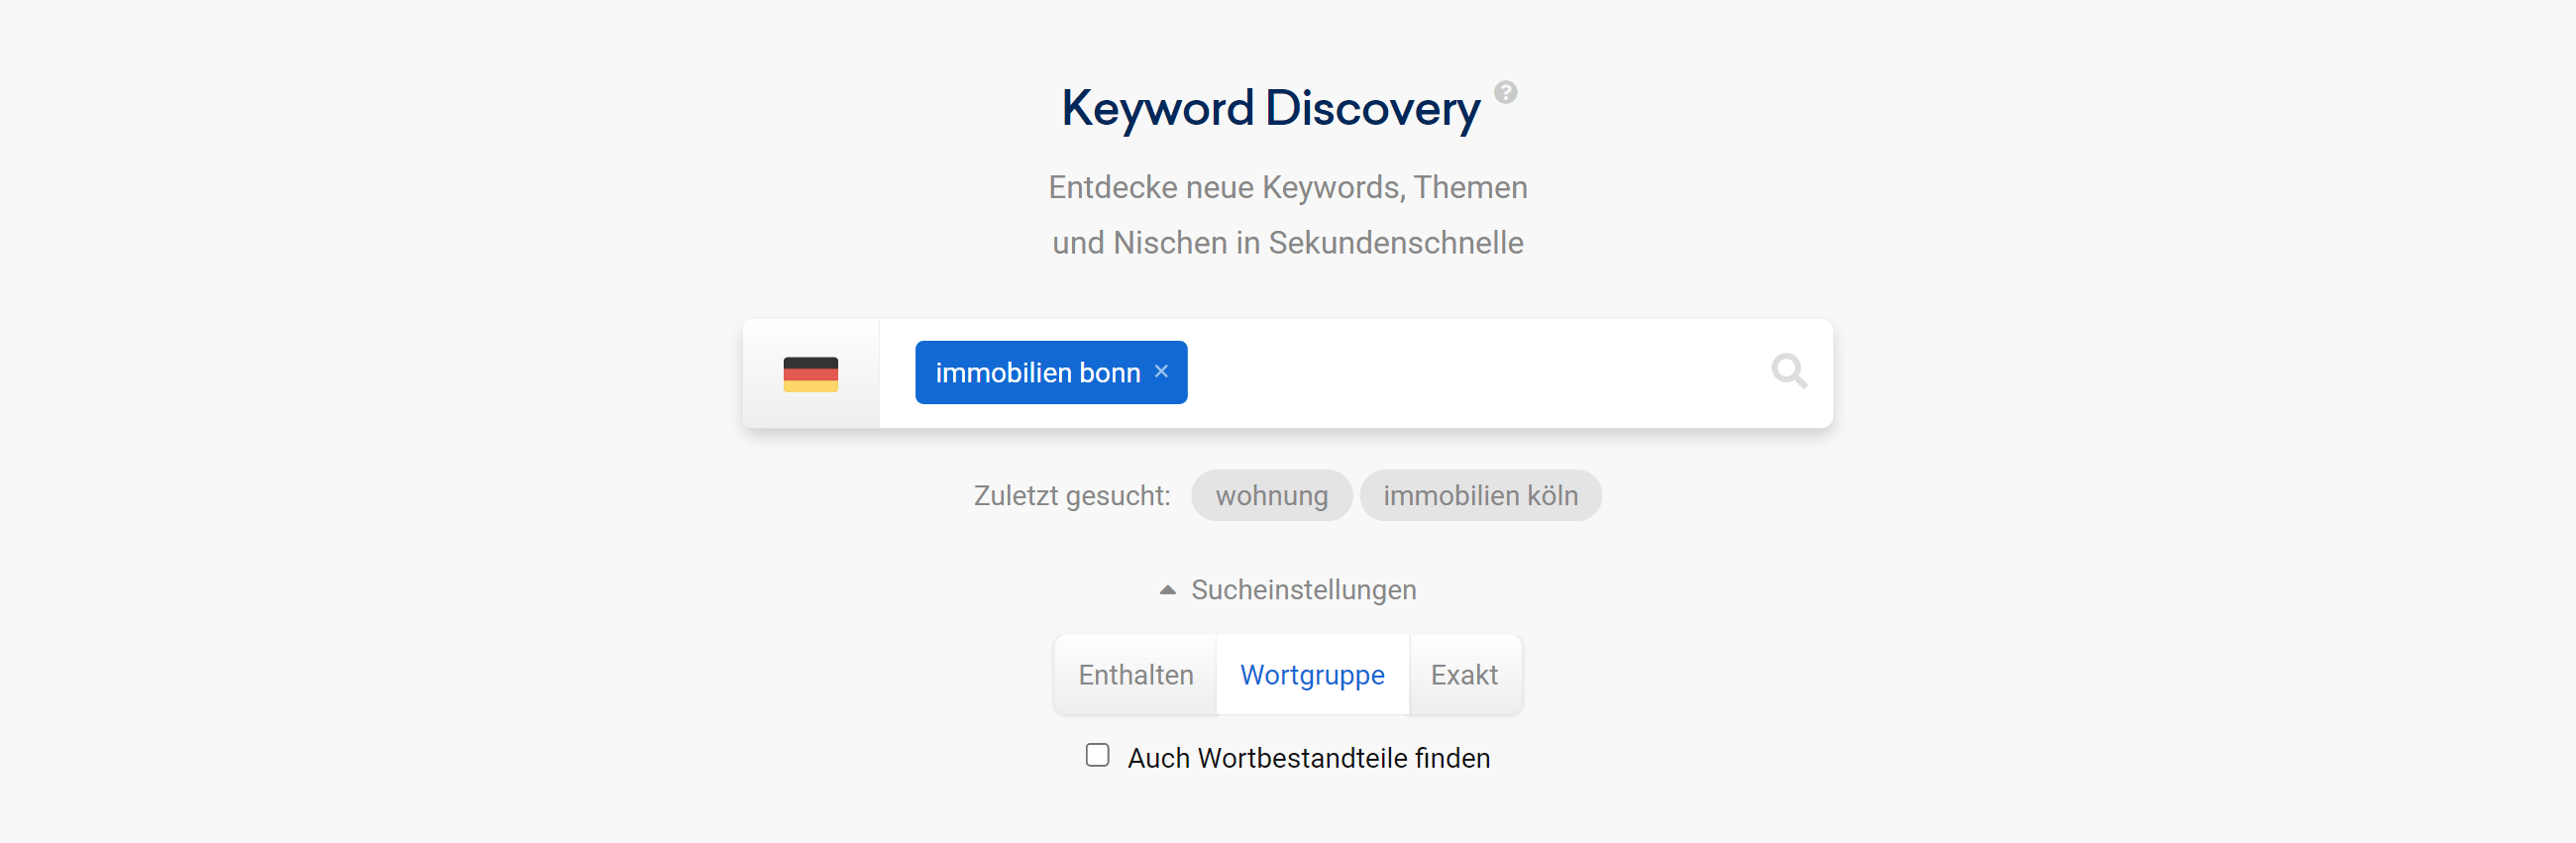 Der Tool "Keyword Discovery" in der SISTRIX Toolbox